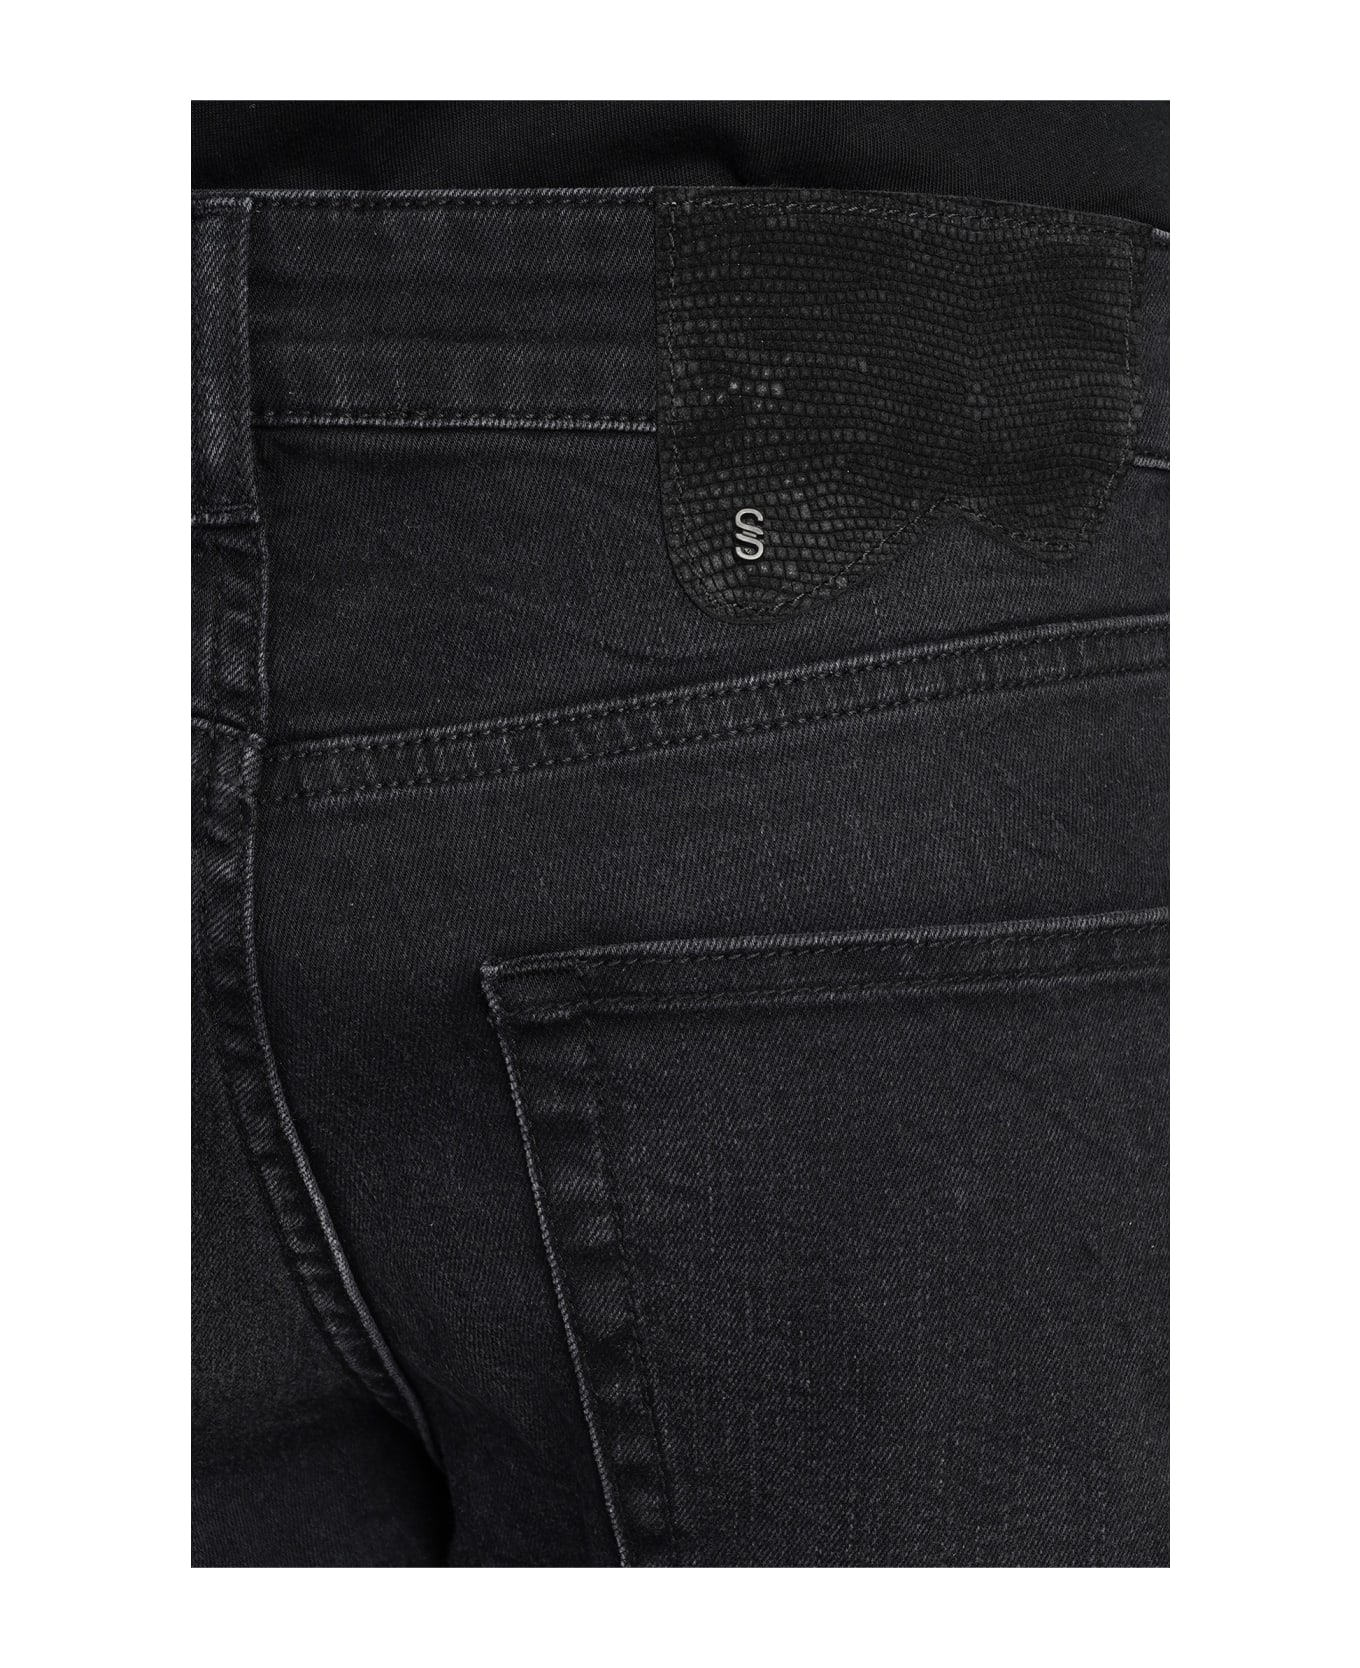 Salvatore Santoro Jeans In Black Cotton - black デニム